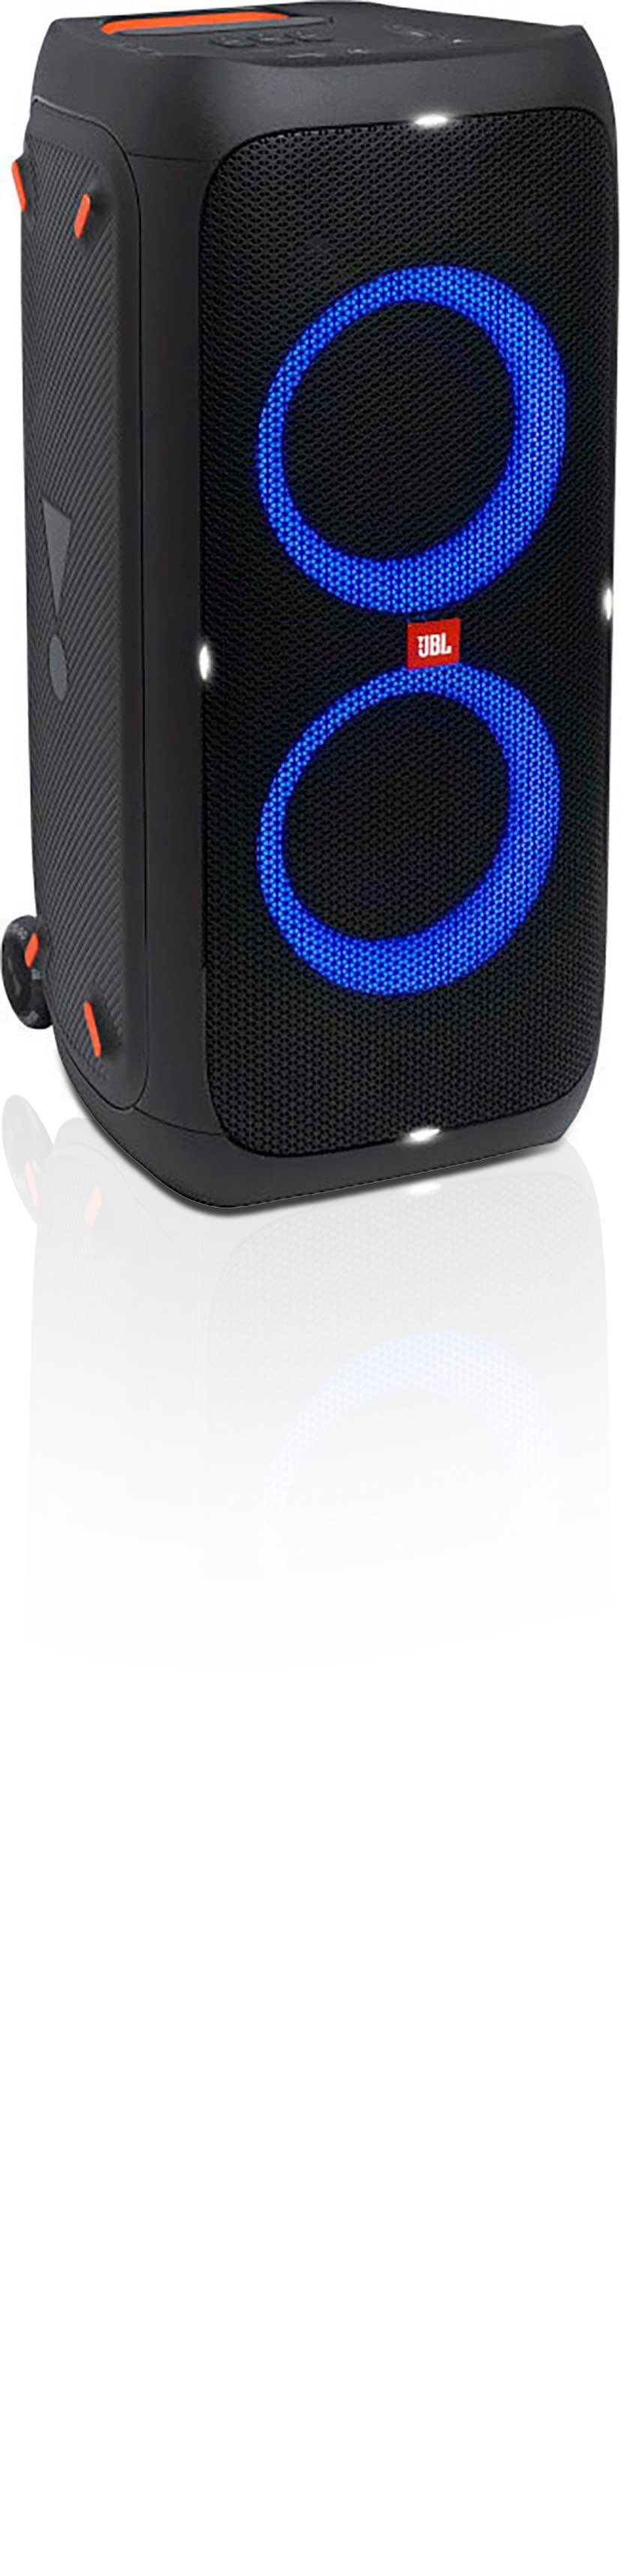 (Bluetooth, Box Party tolle Party-Lautsprecher Lichteffekte, Akku, rollbar, USB) W, 240 JBL 310